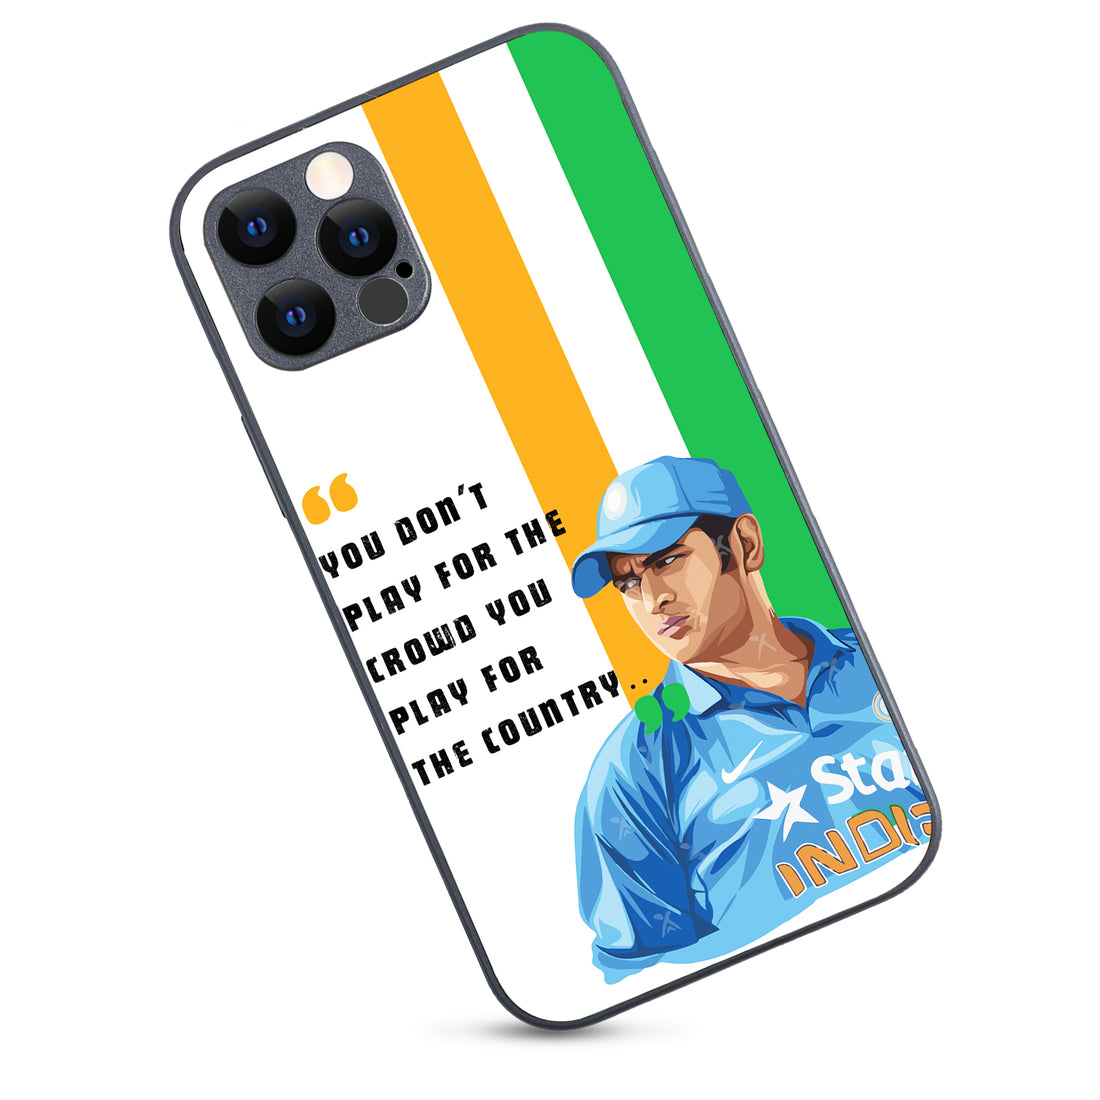 Dhoni Sports iPhone 12 Pro Case